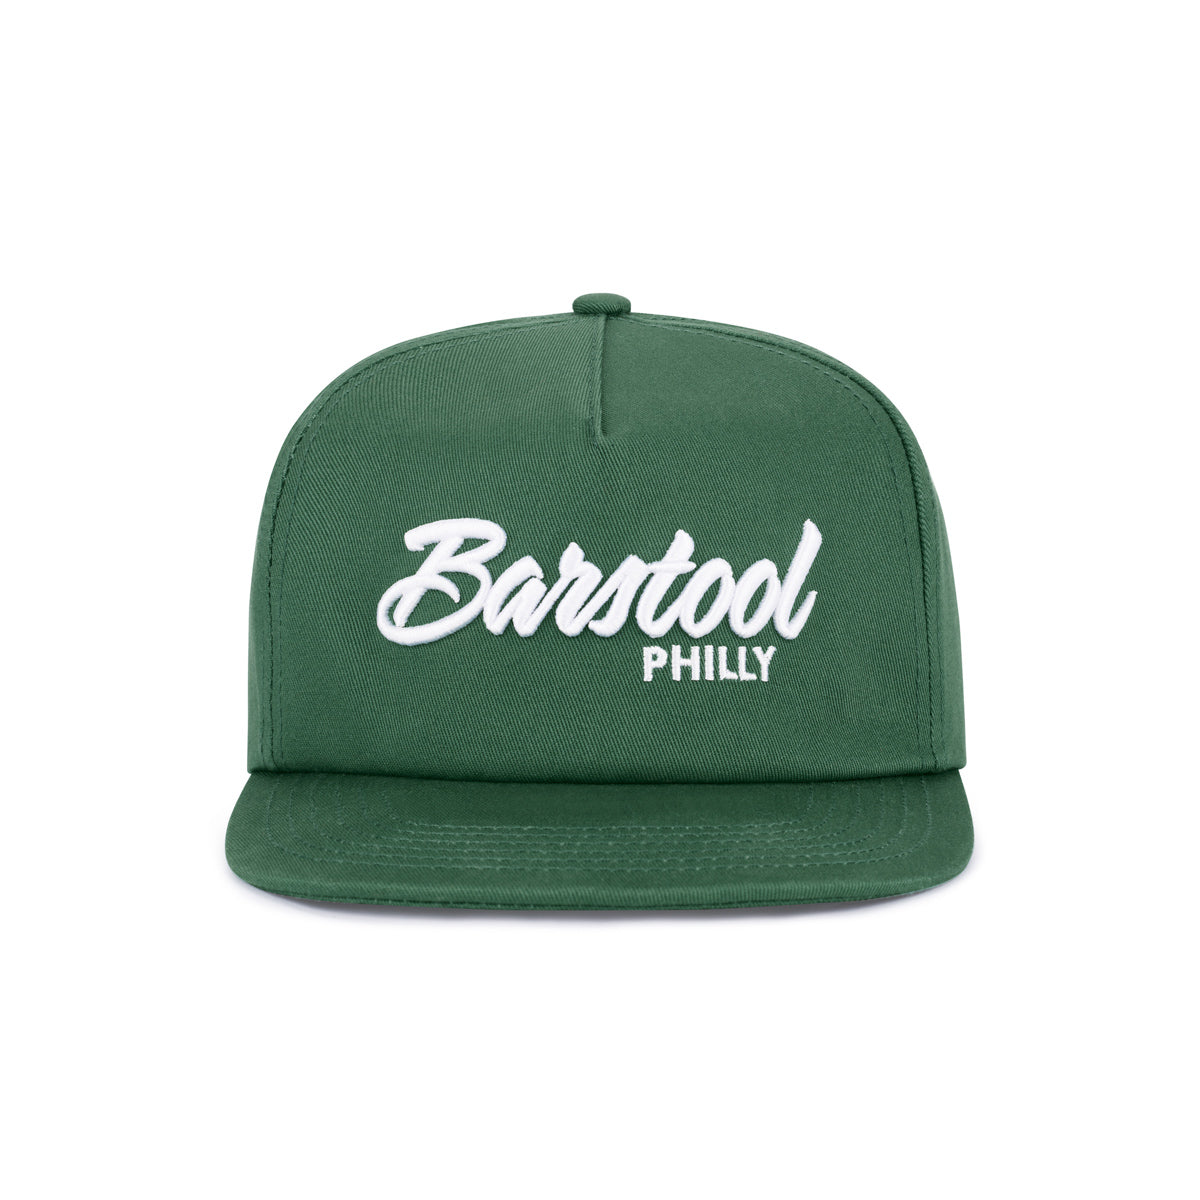 Barstool Philly Retro Snapback Hat-Hats-Barstool Sports-Green-One Size-Barstool Sports